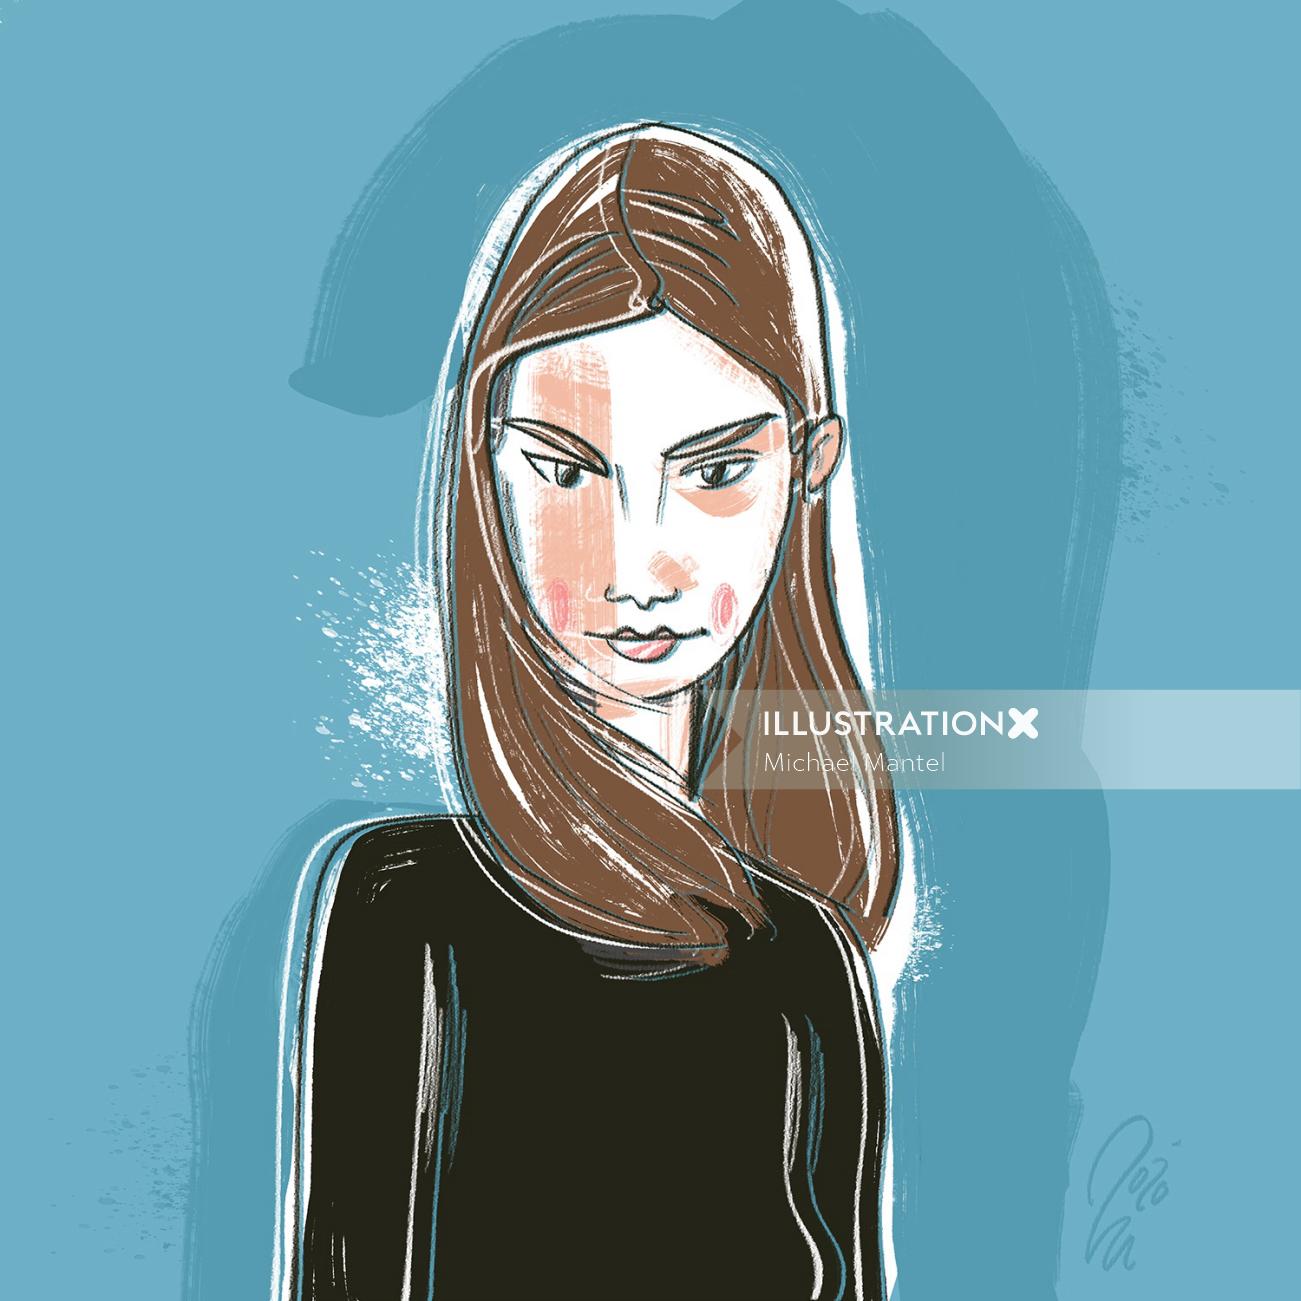 Brown hair girl graphic illustration